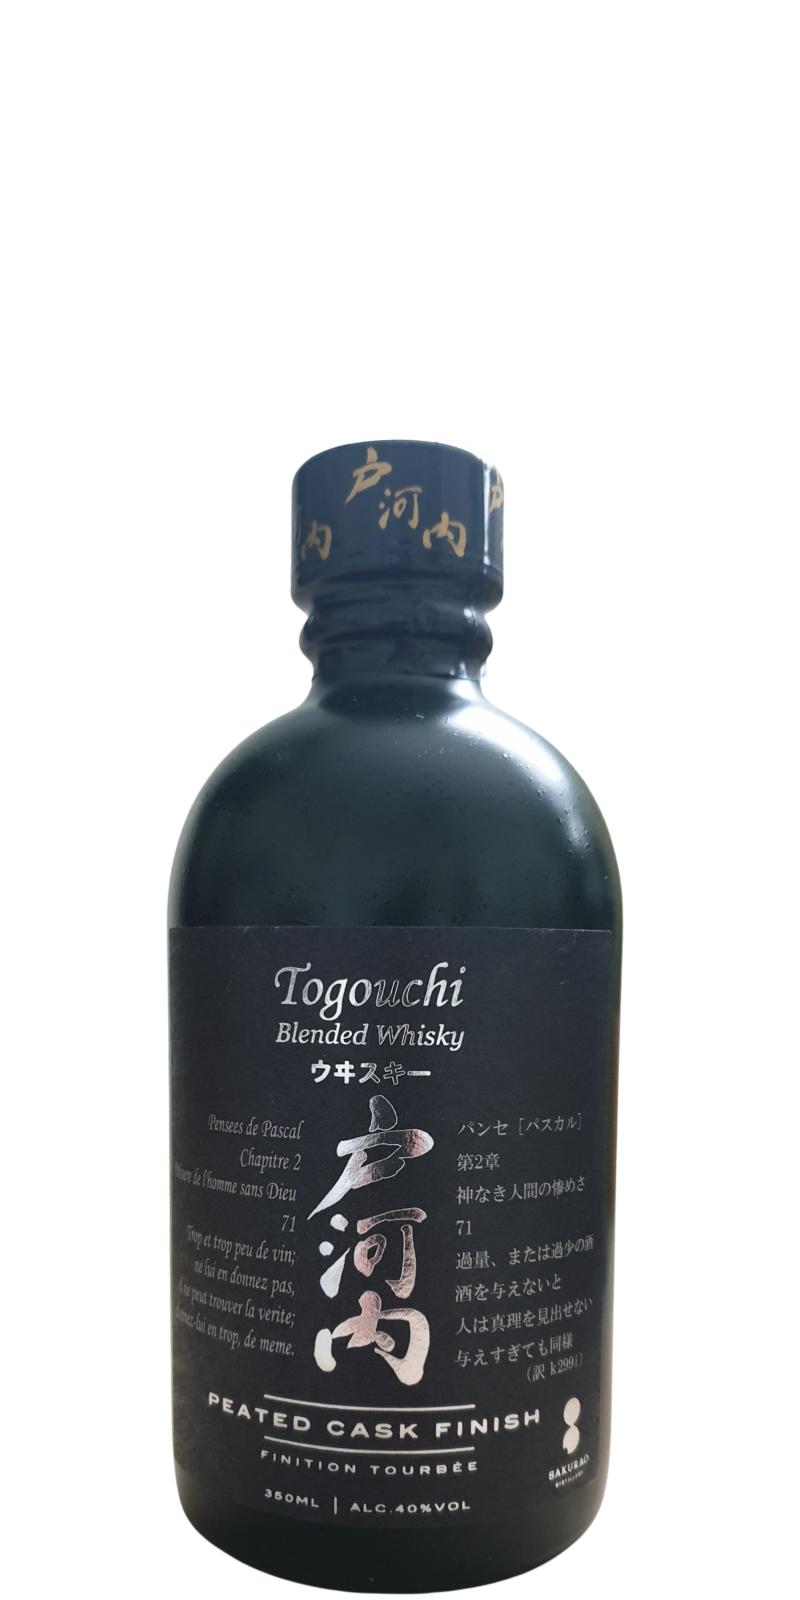 Togouchi Blended Whisky Peated Cask Finish Peated Cask Finish 40% 350ml